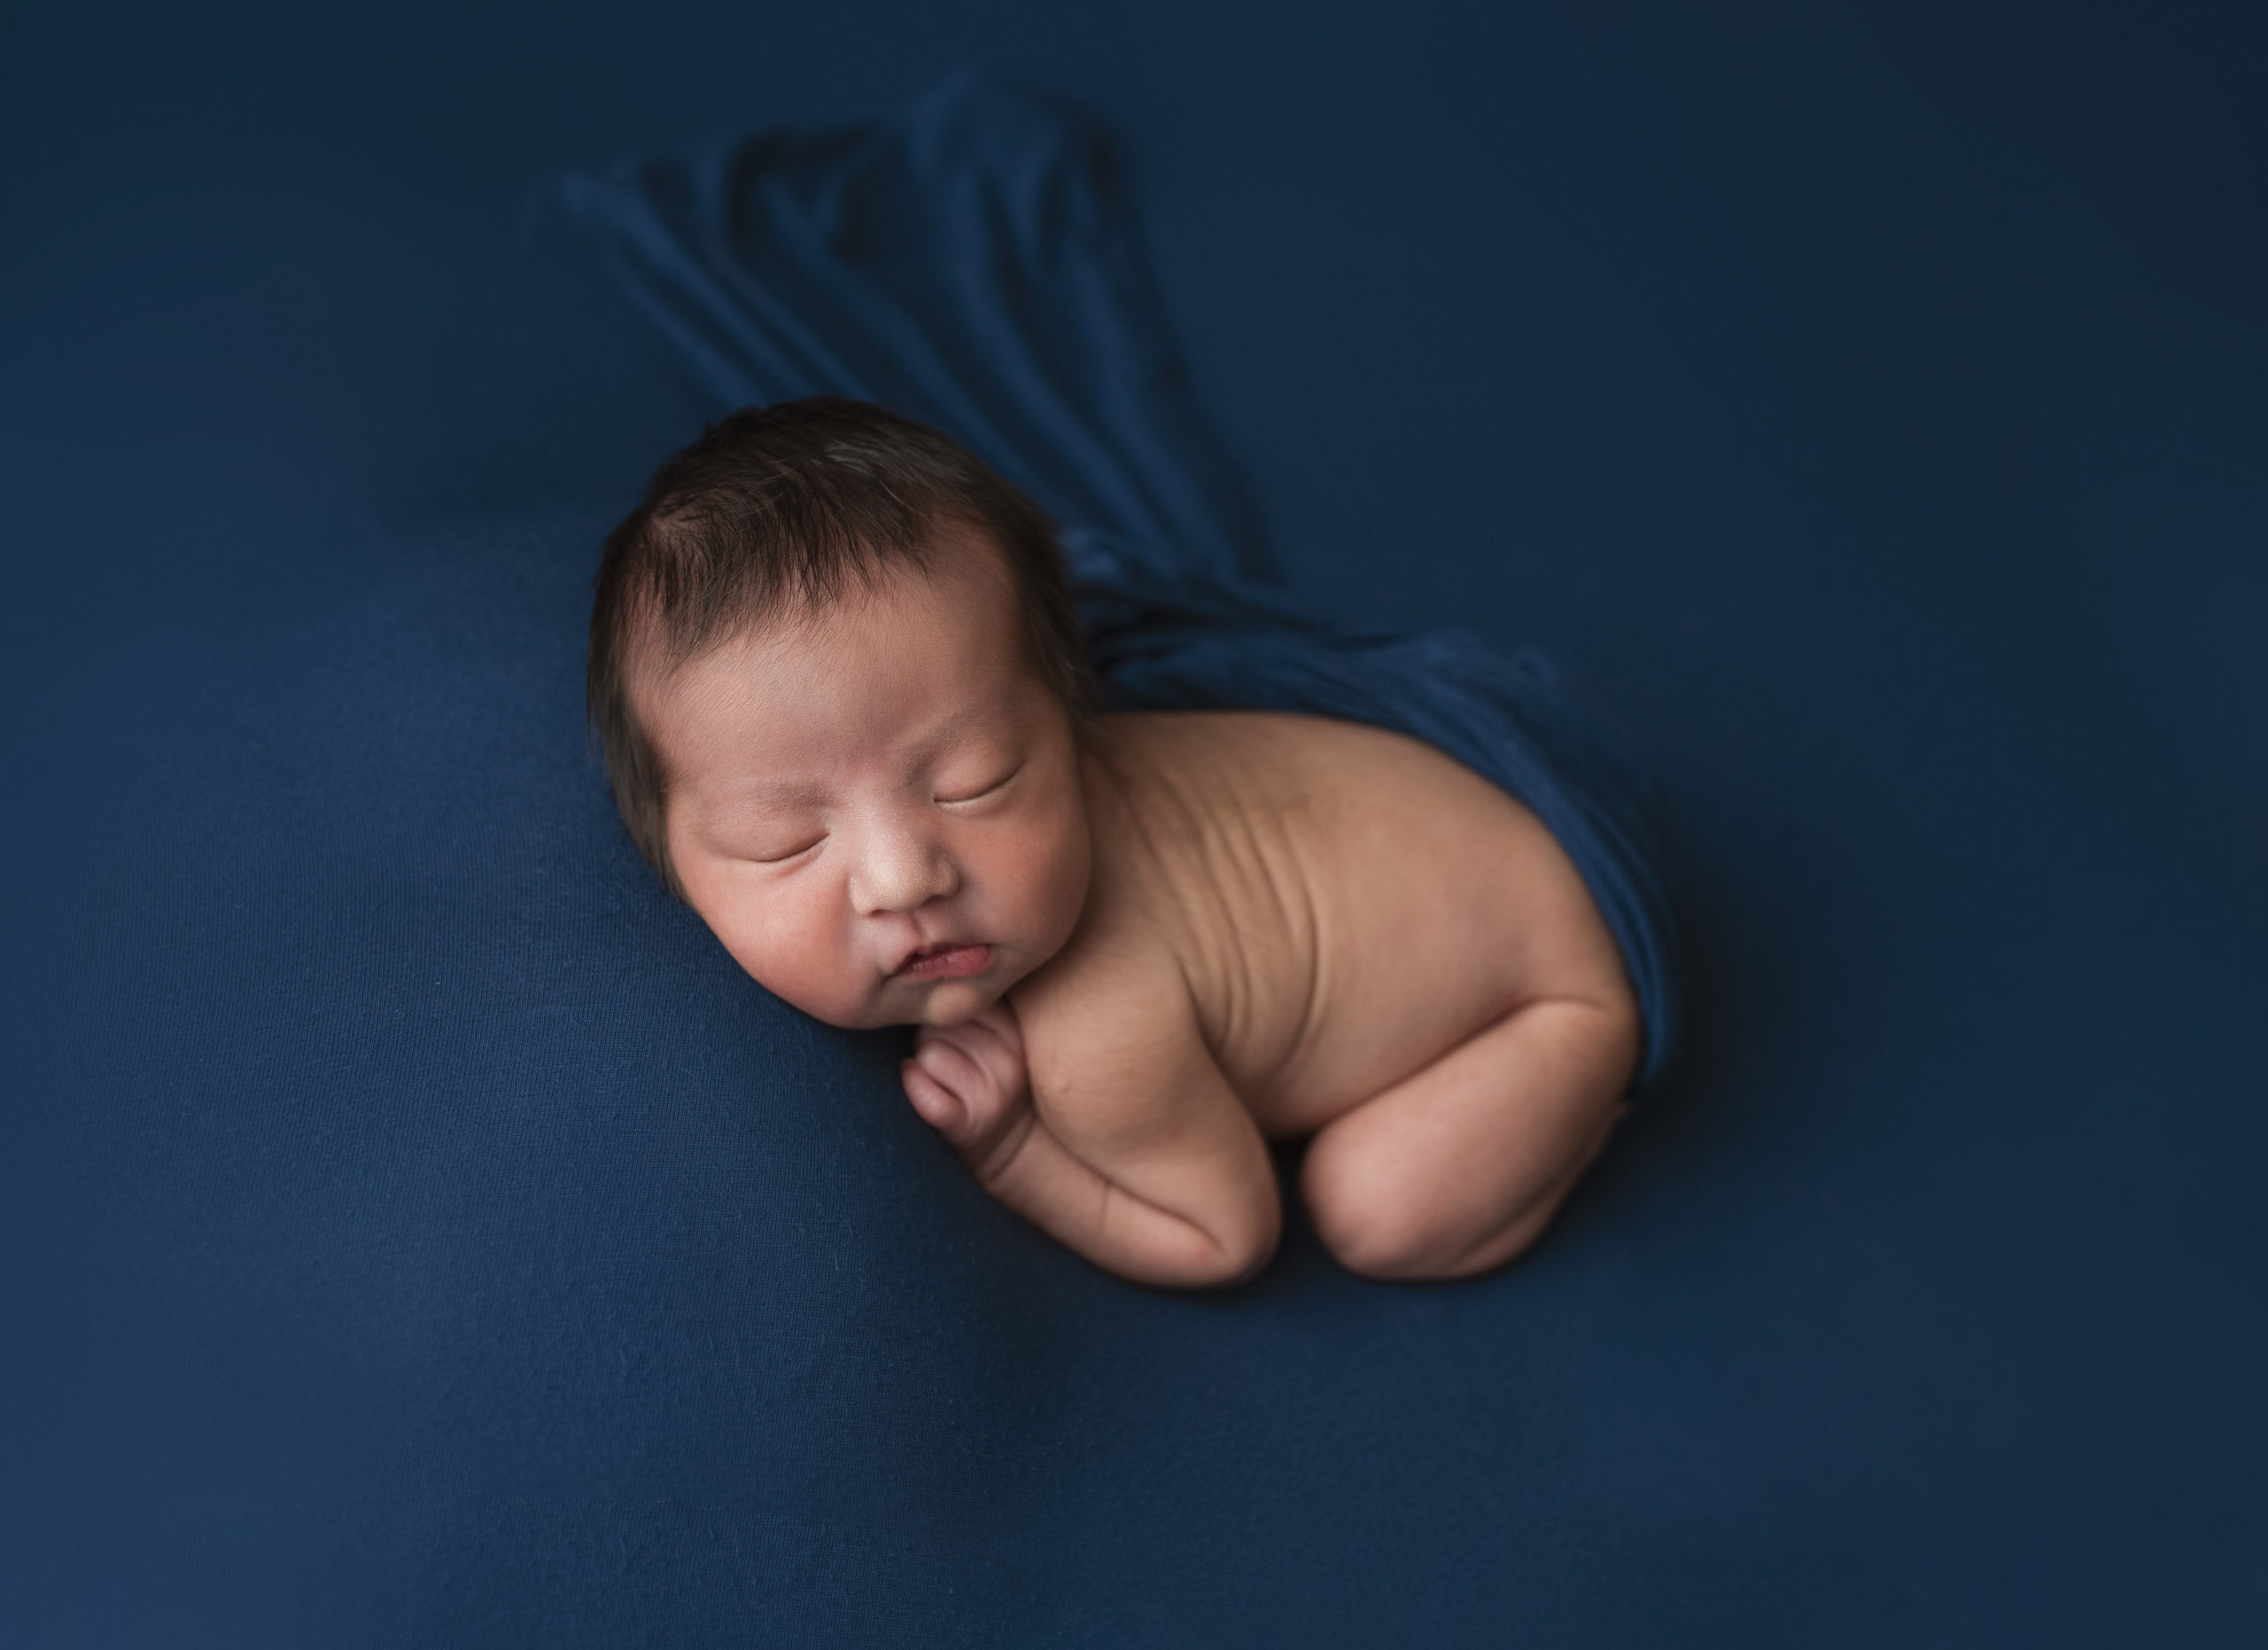 grand rapids michigan newborn photography baby sleeping